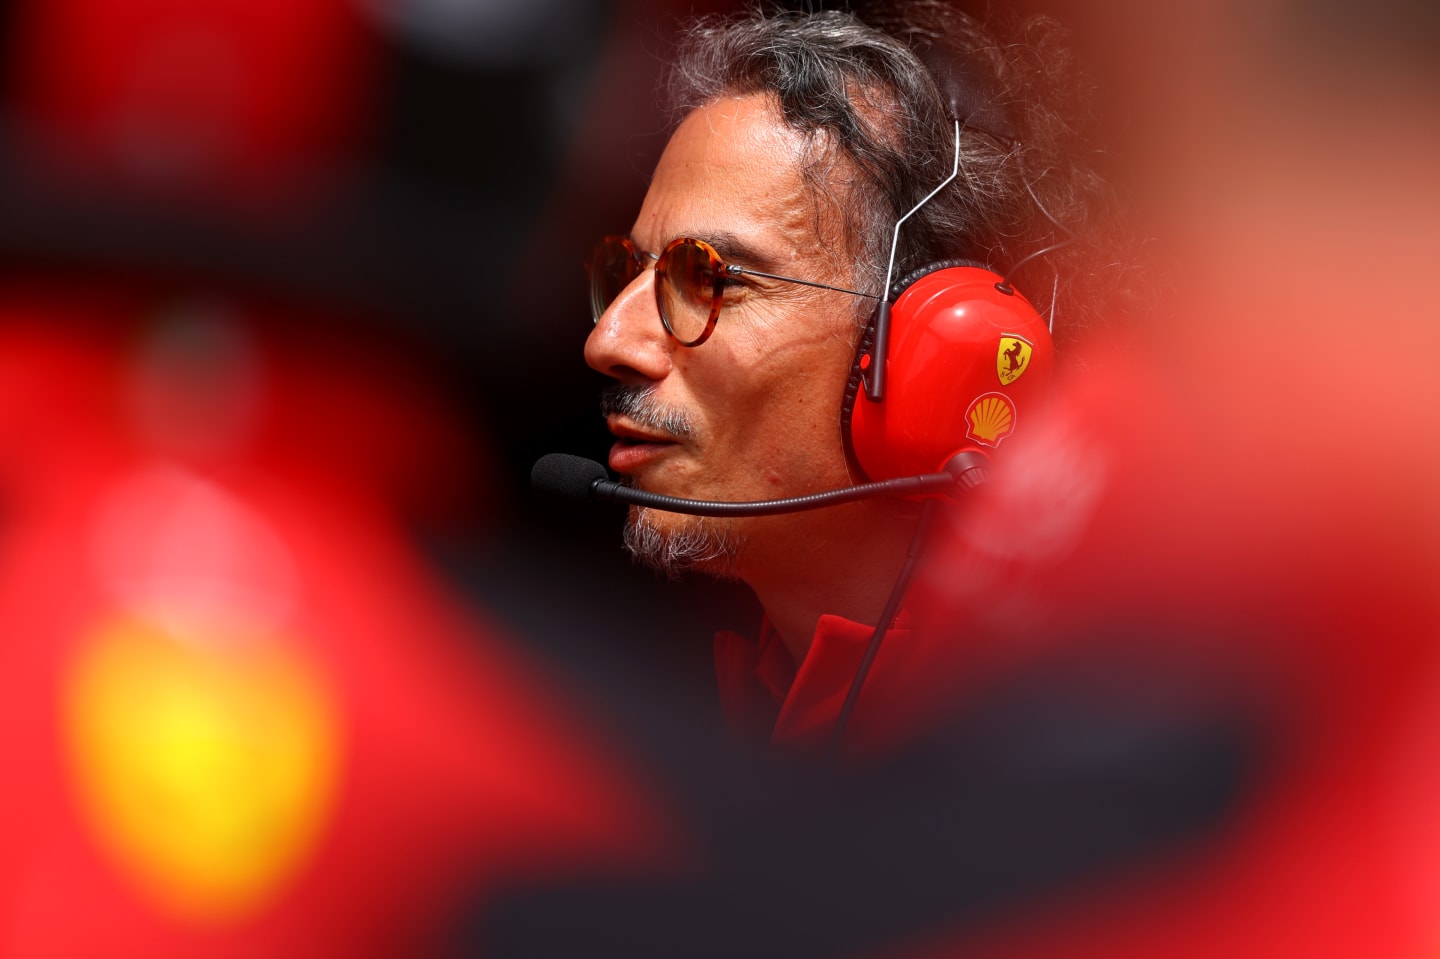 BAKU, AZERBAIJAN - APRIL 28:  Laurent Mekies, Scuderia Ferrari Sporting Director ahead of the F1